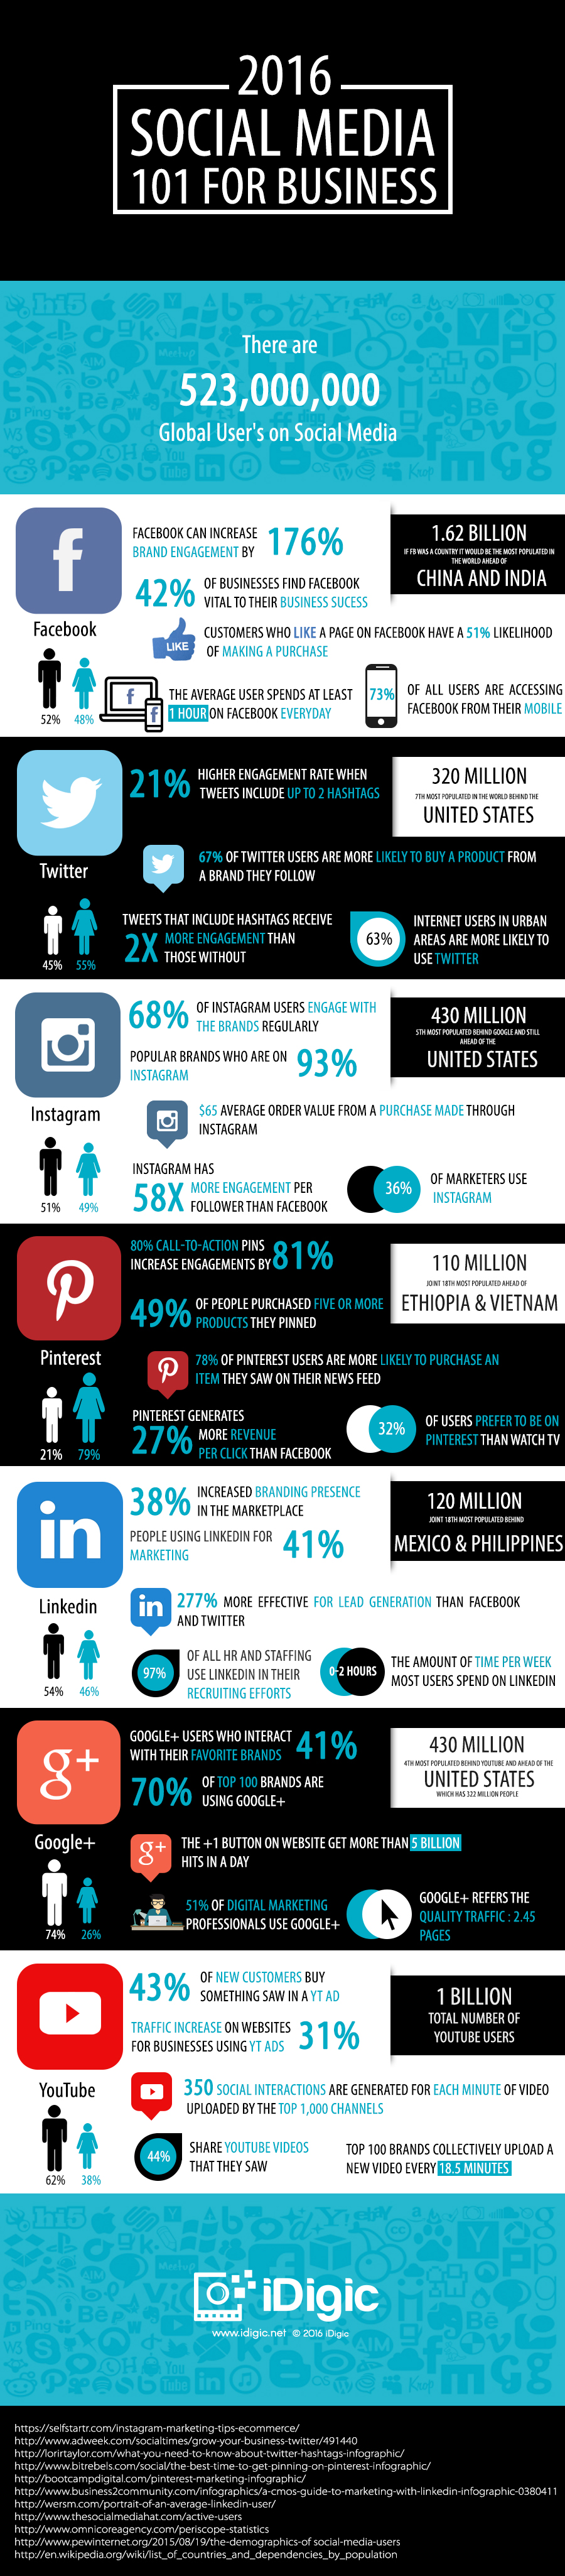 Social Media 101 For Business - Factosocial